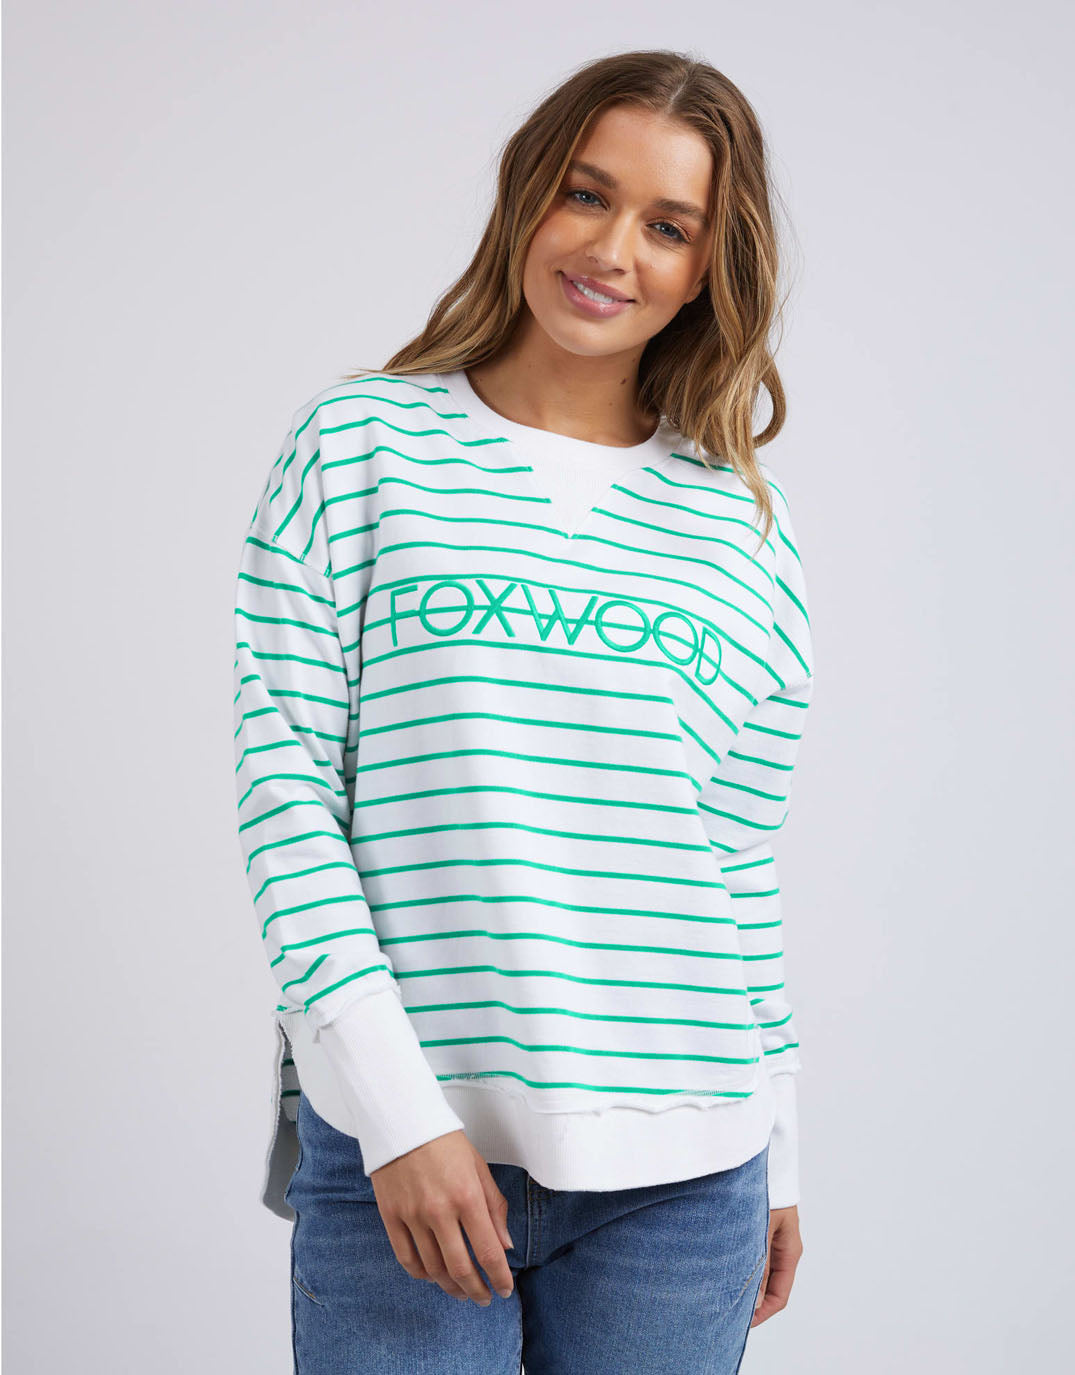 foxwood-simplified-stripe-crew-green-womens-clothing